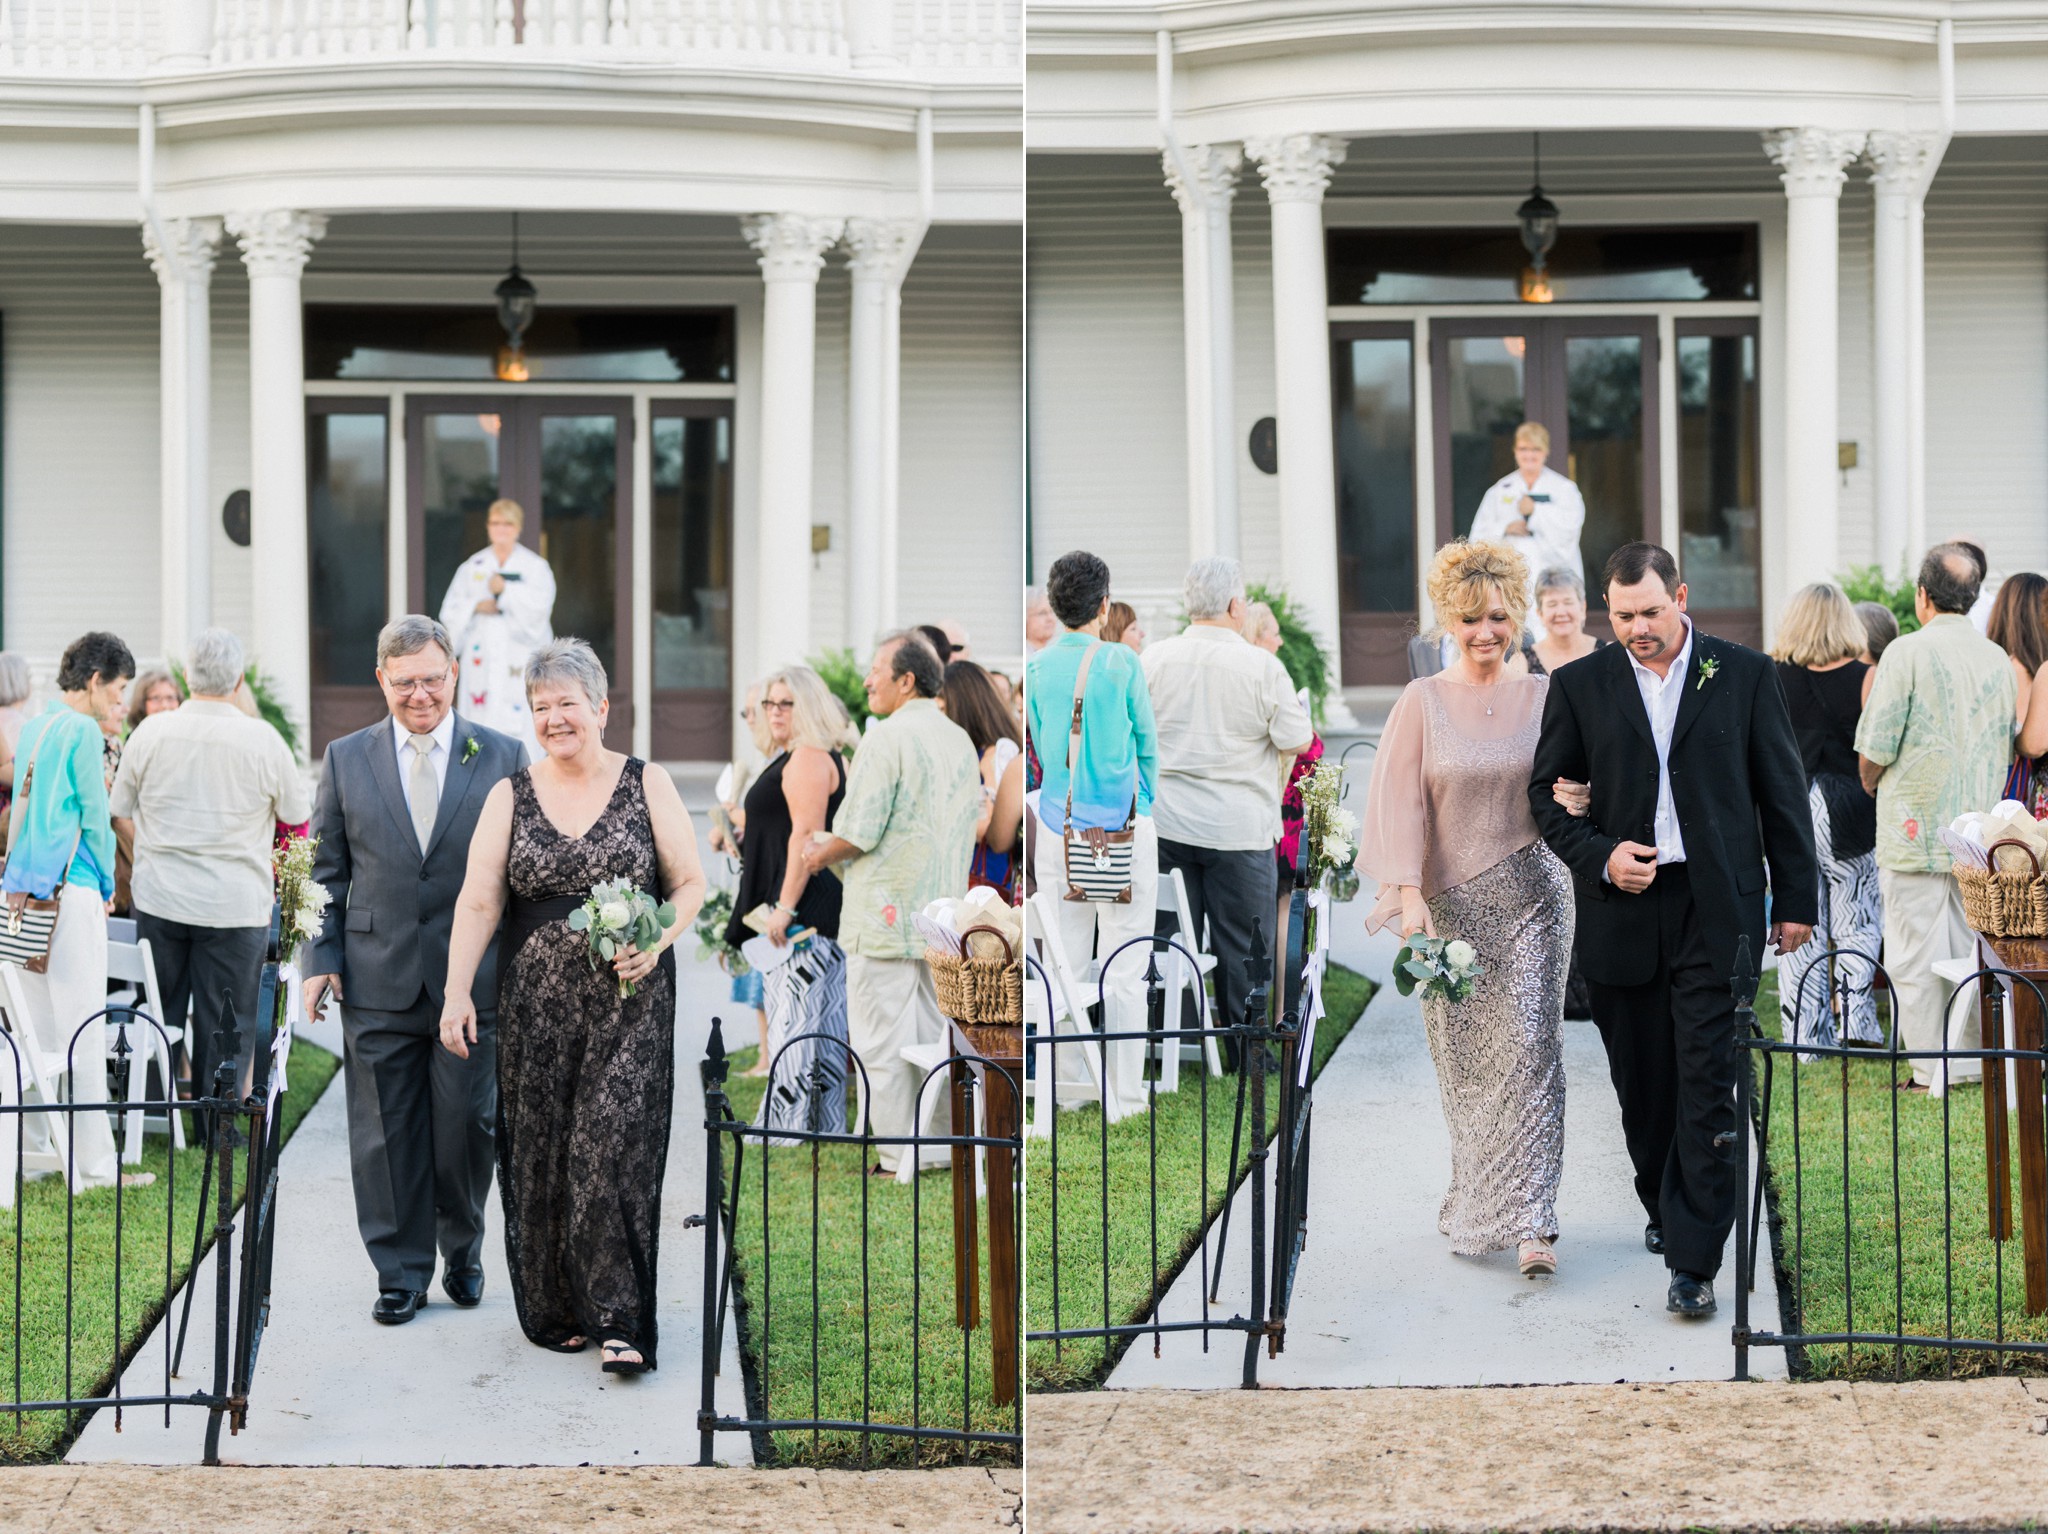 Neutral summer wedding at Redding House in Gulfport